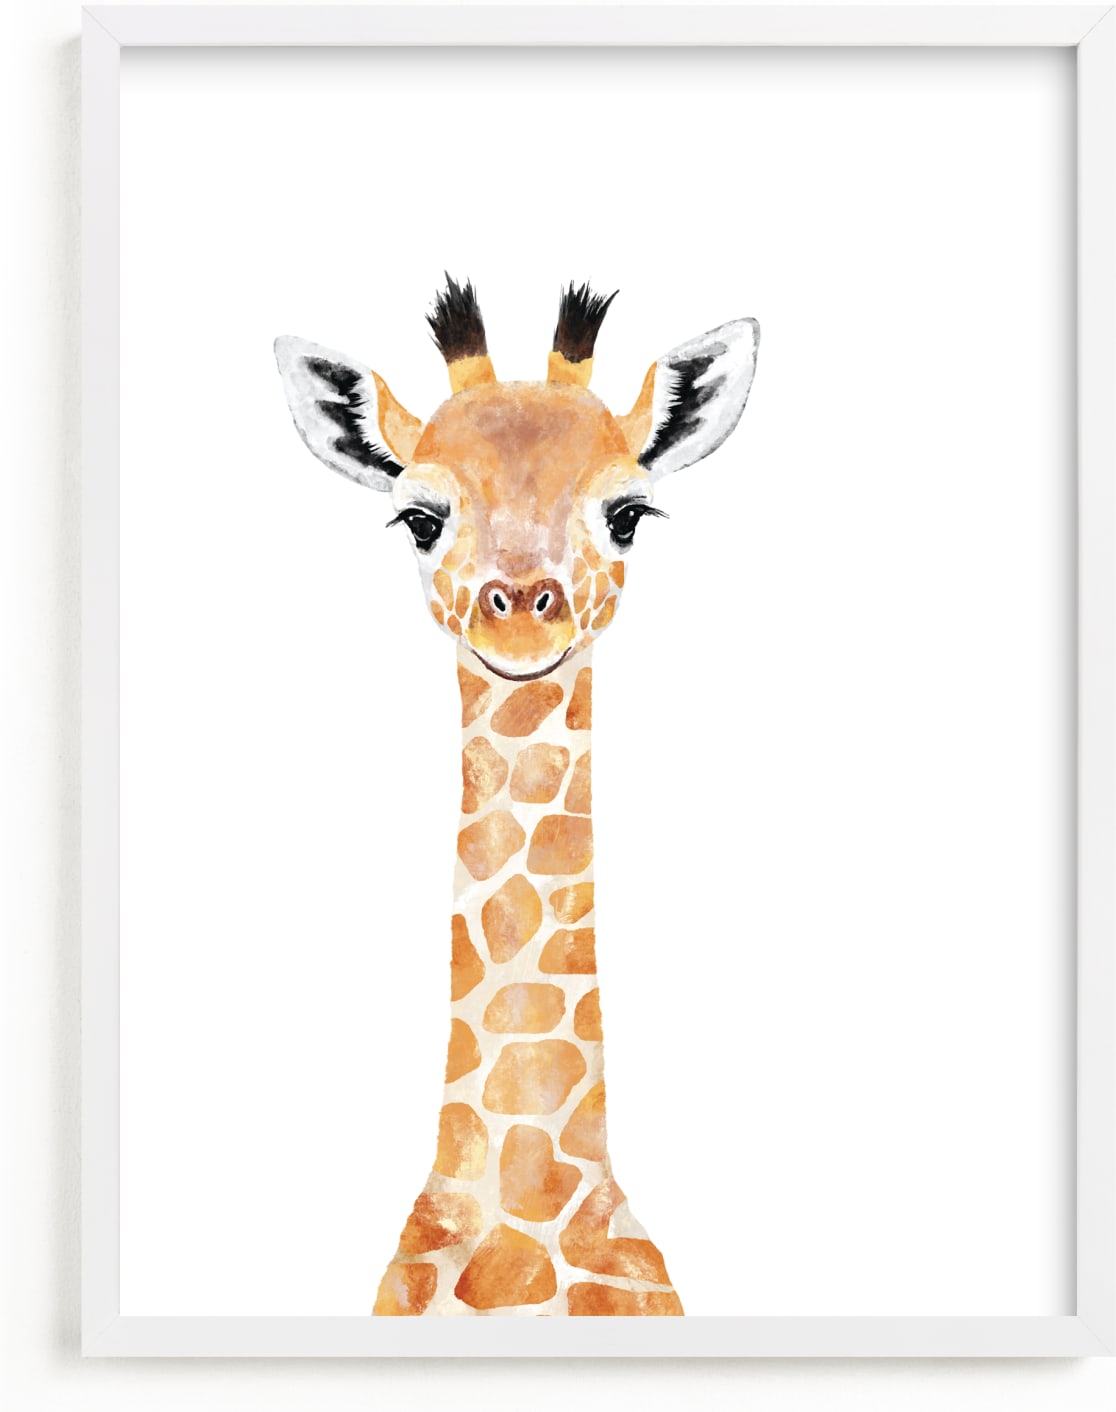 This is a beige art by Cass Loh called Baby Giraffe 2.